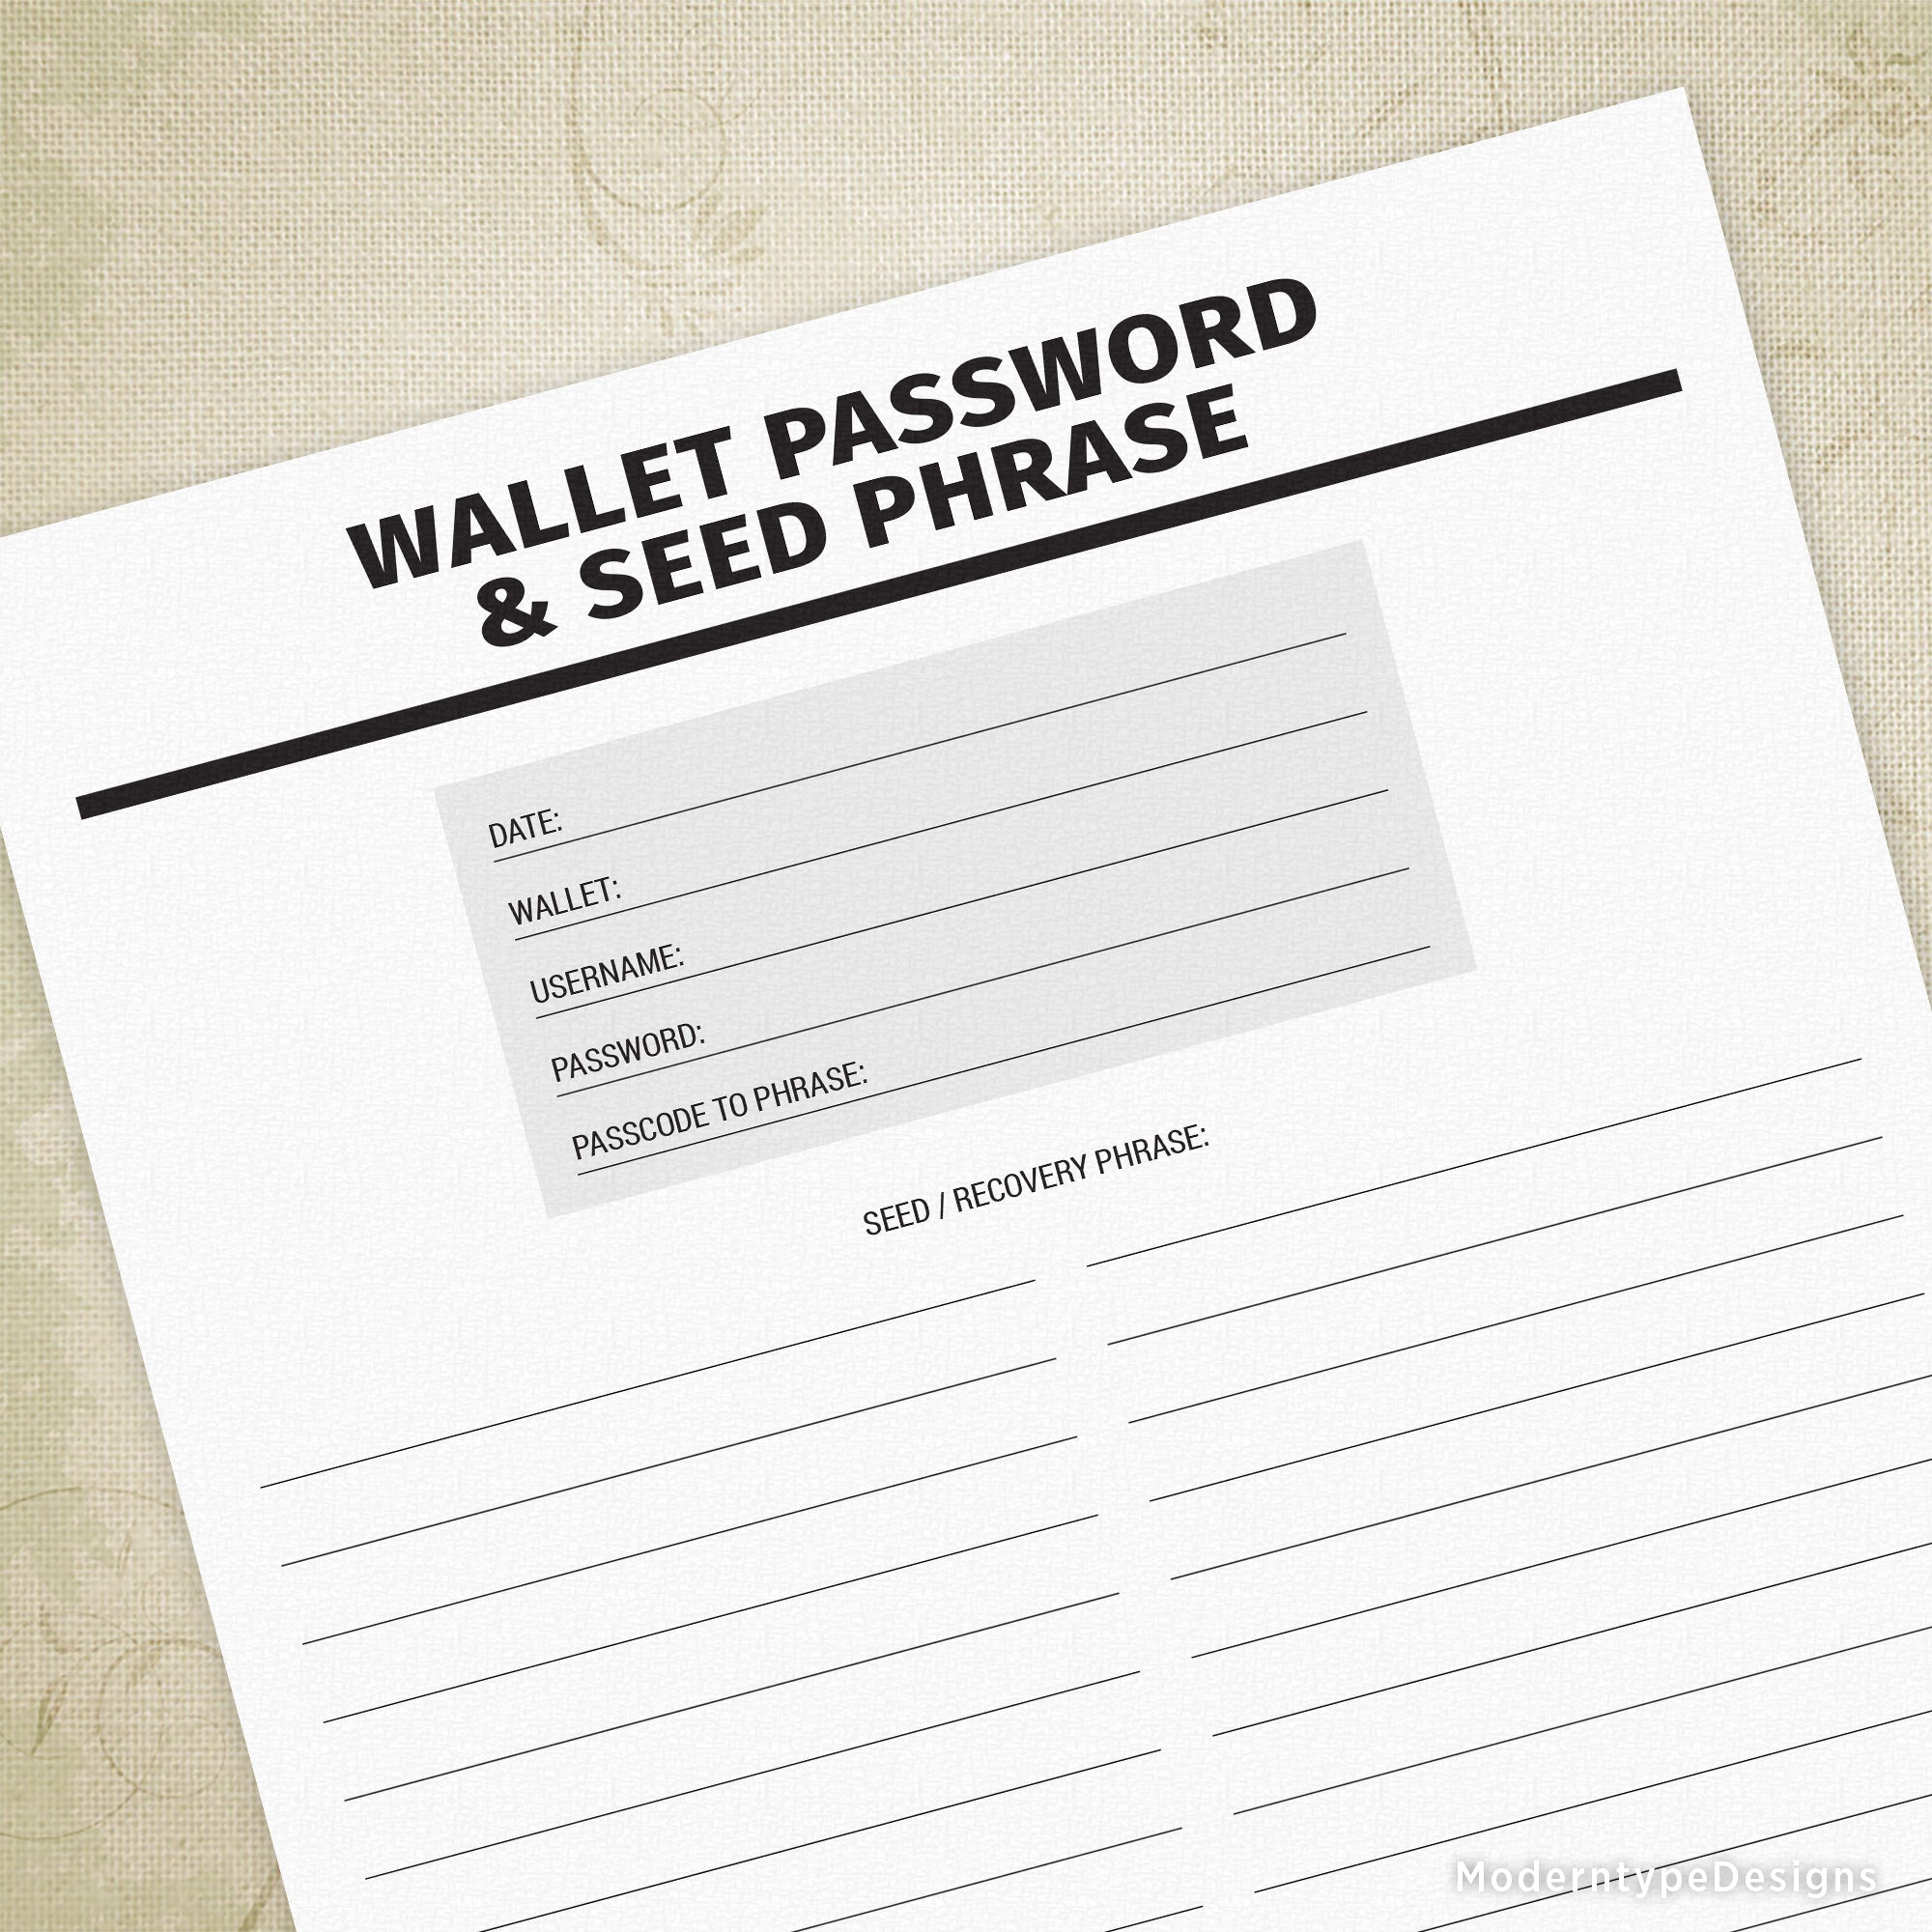 Wallet Password & Seed Phrase Printable